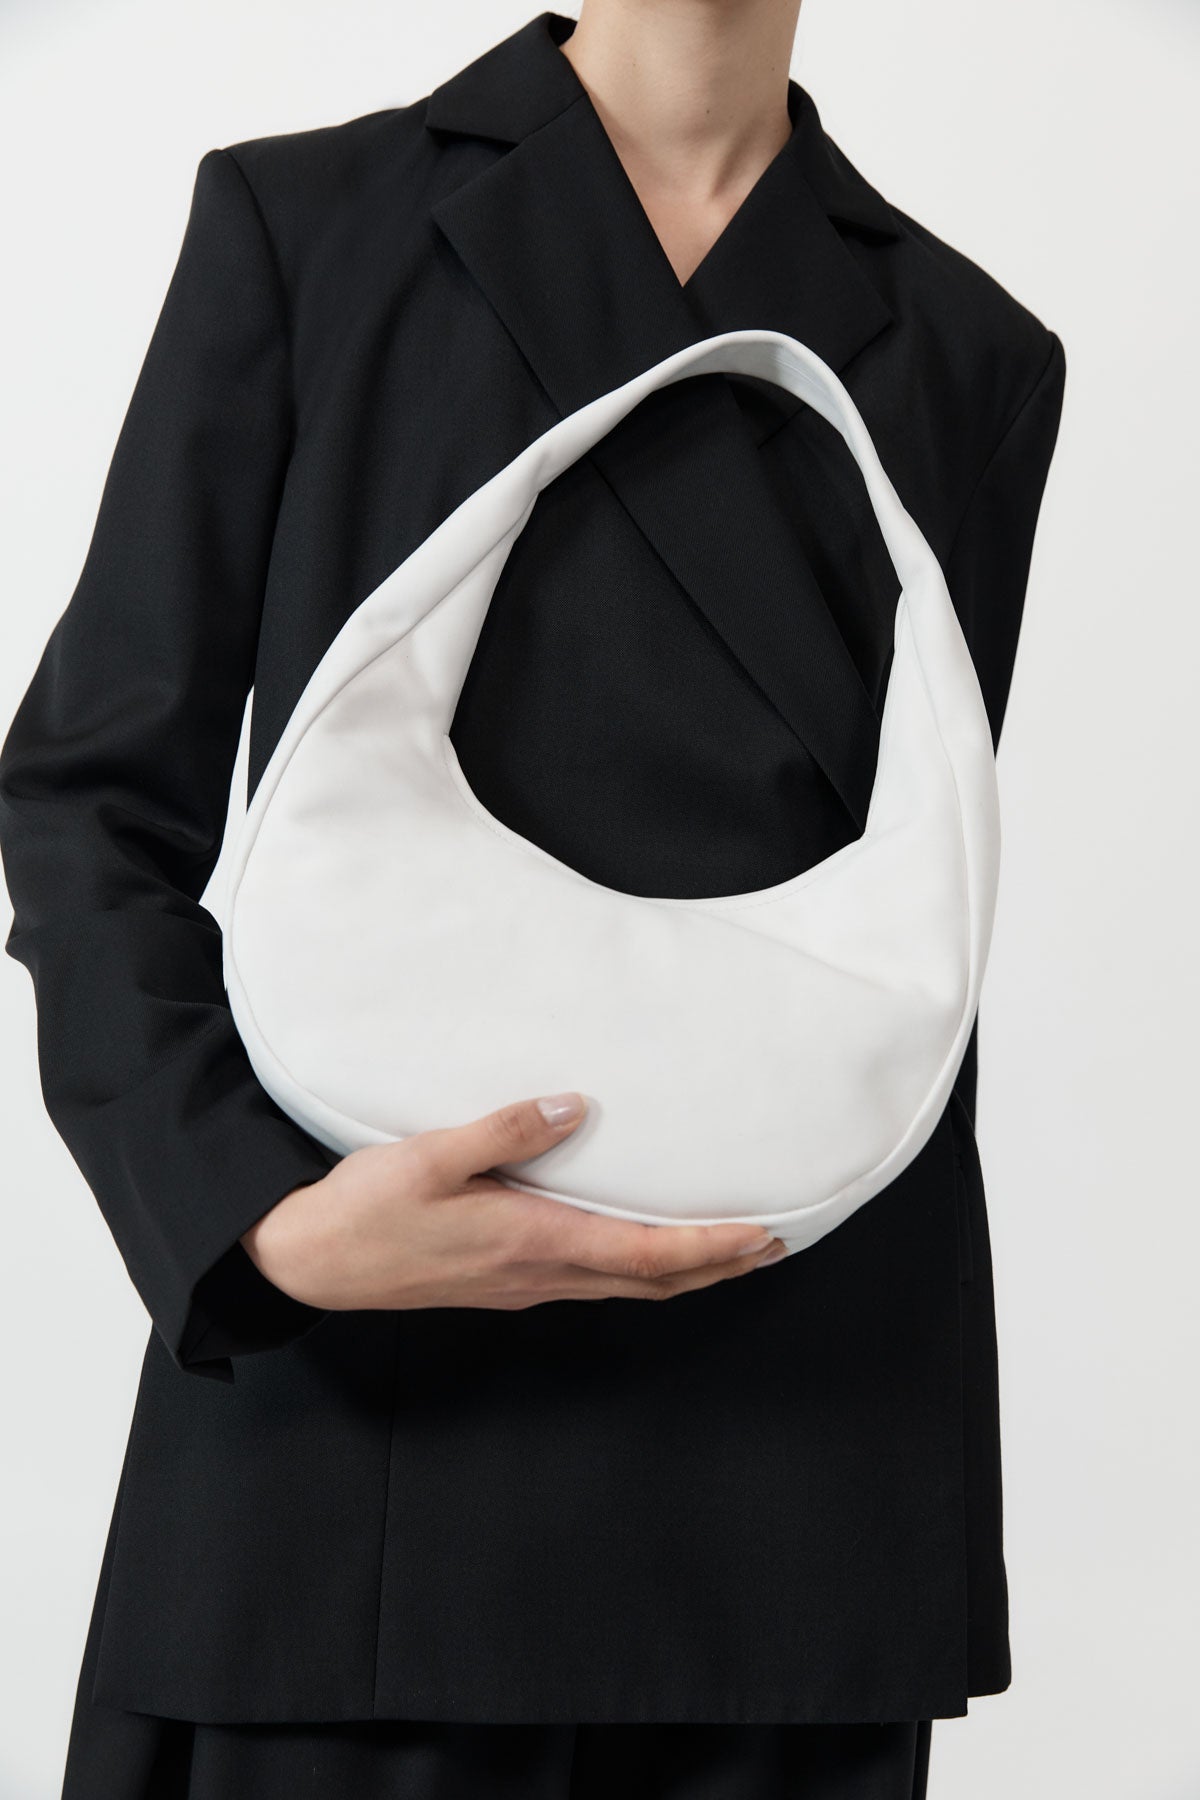 PRE-ORDER: Oval Mini Bag - Cool White